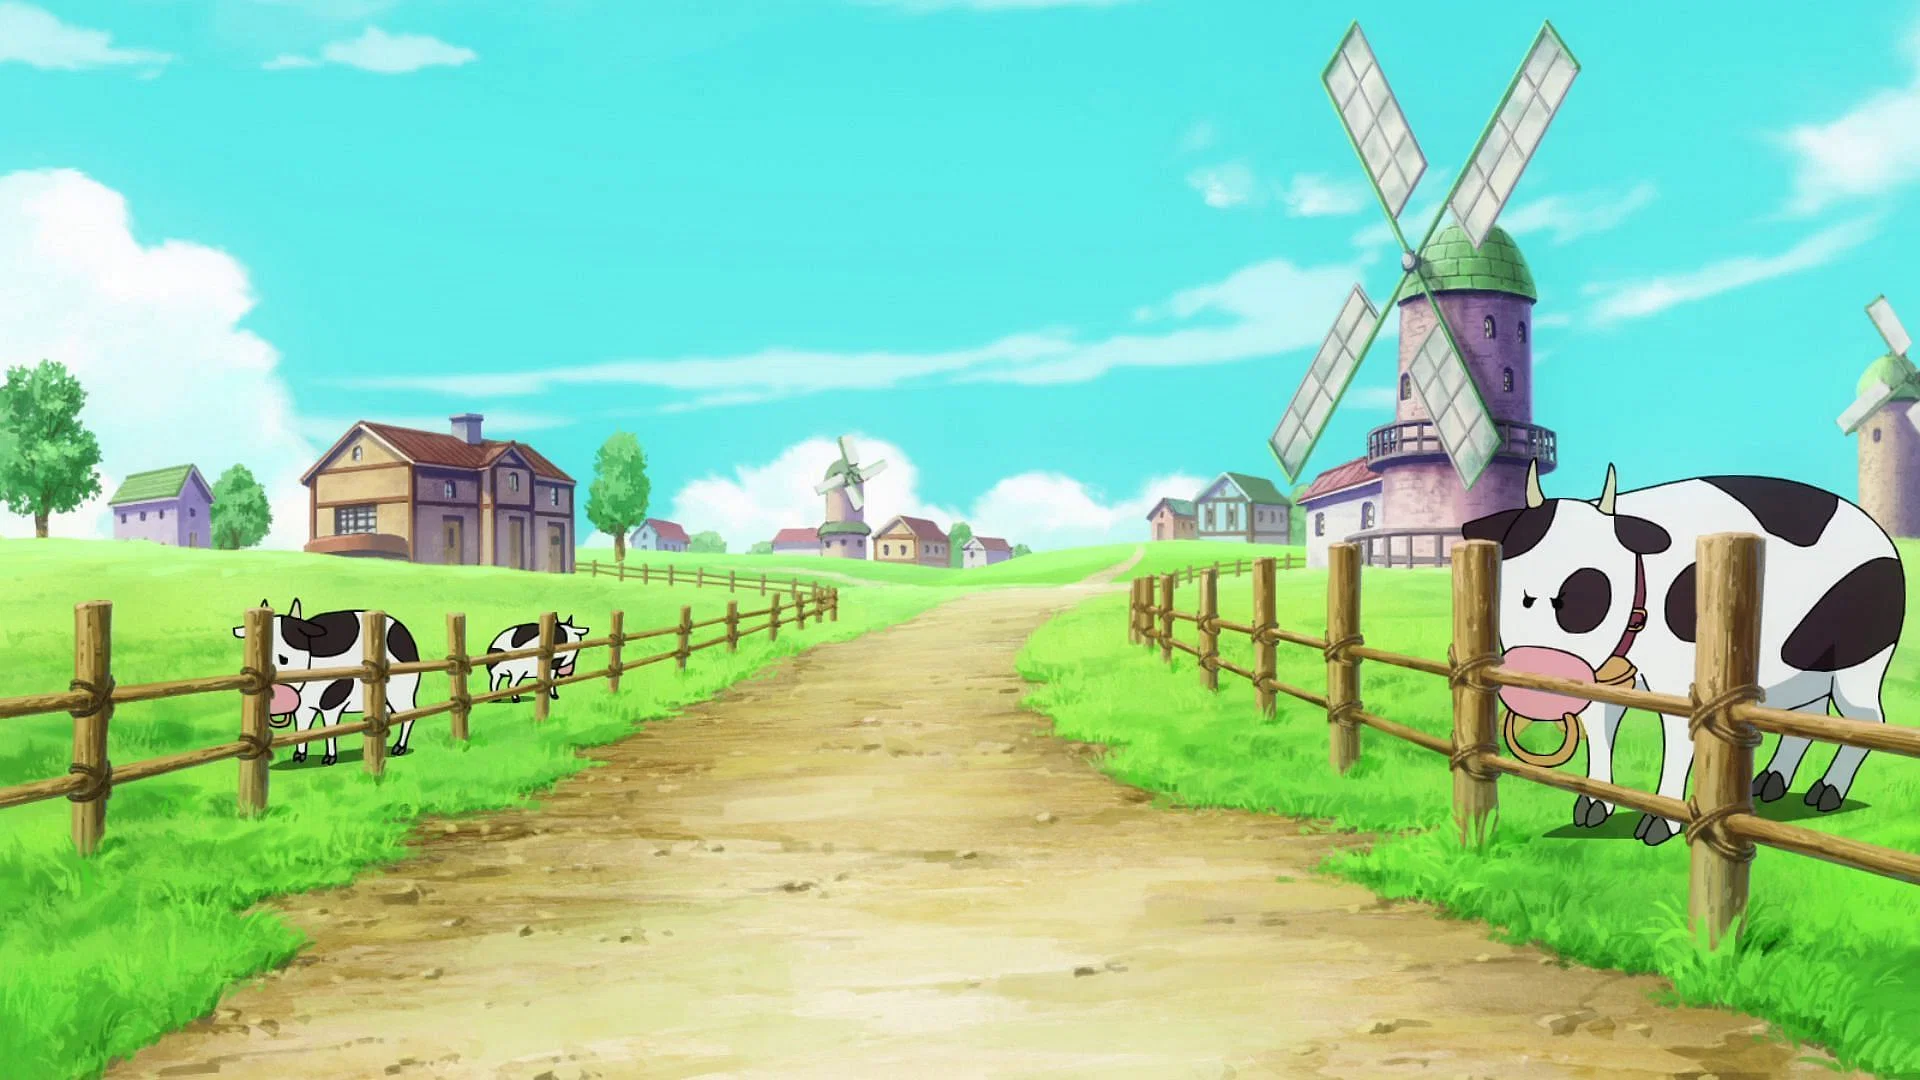 One Piece Chapter 1100: Kuma visits Luffy's hometown